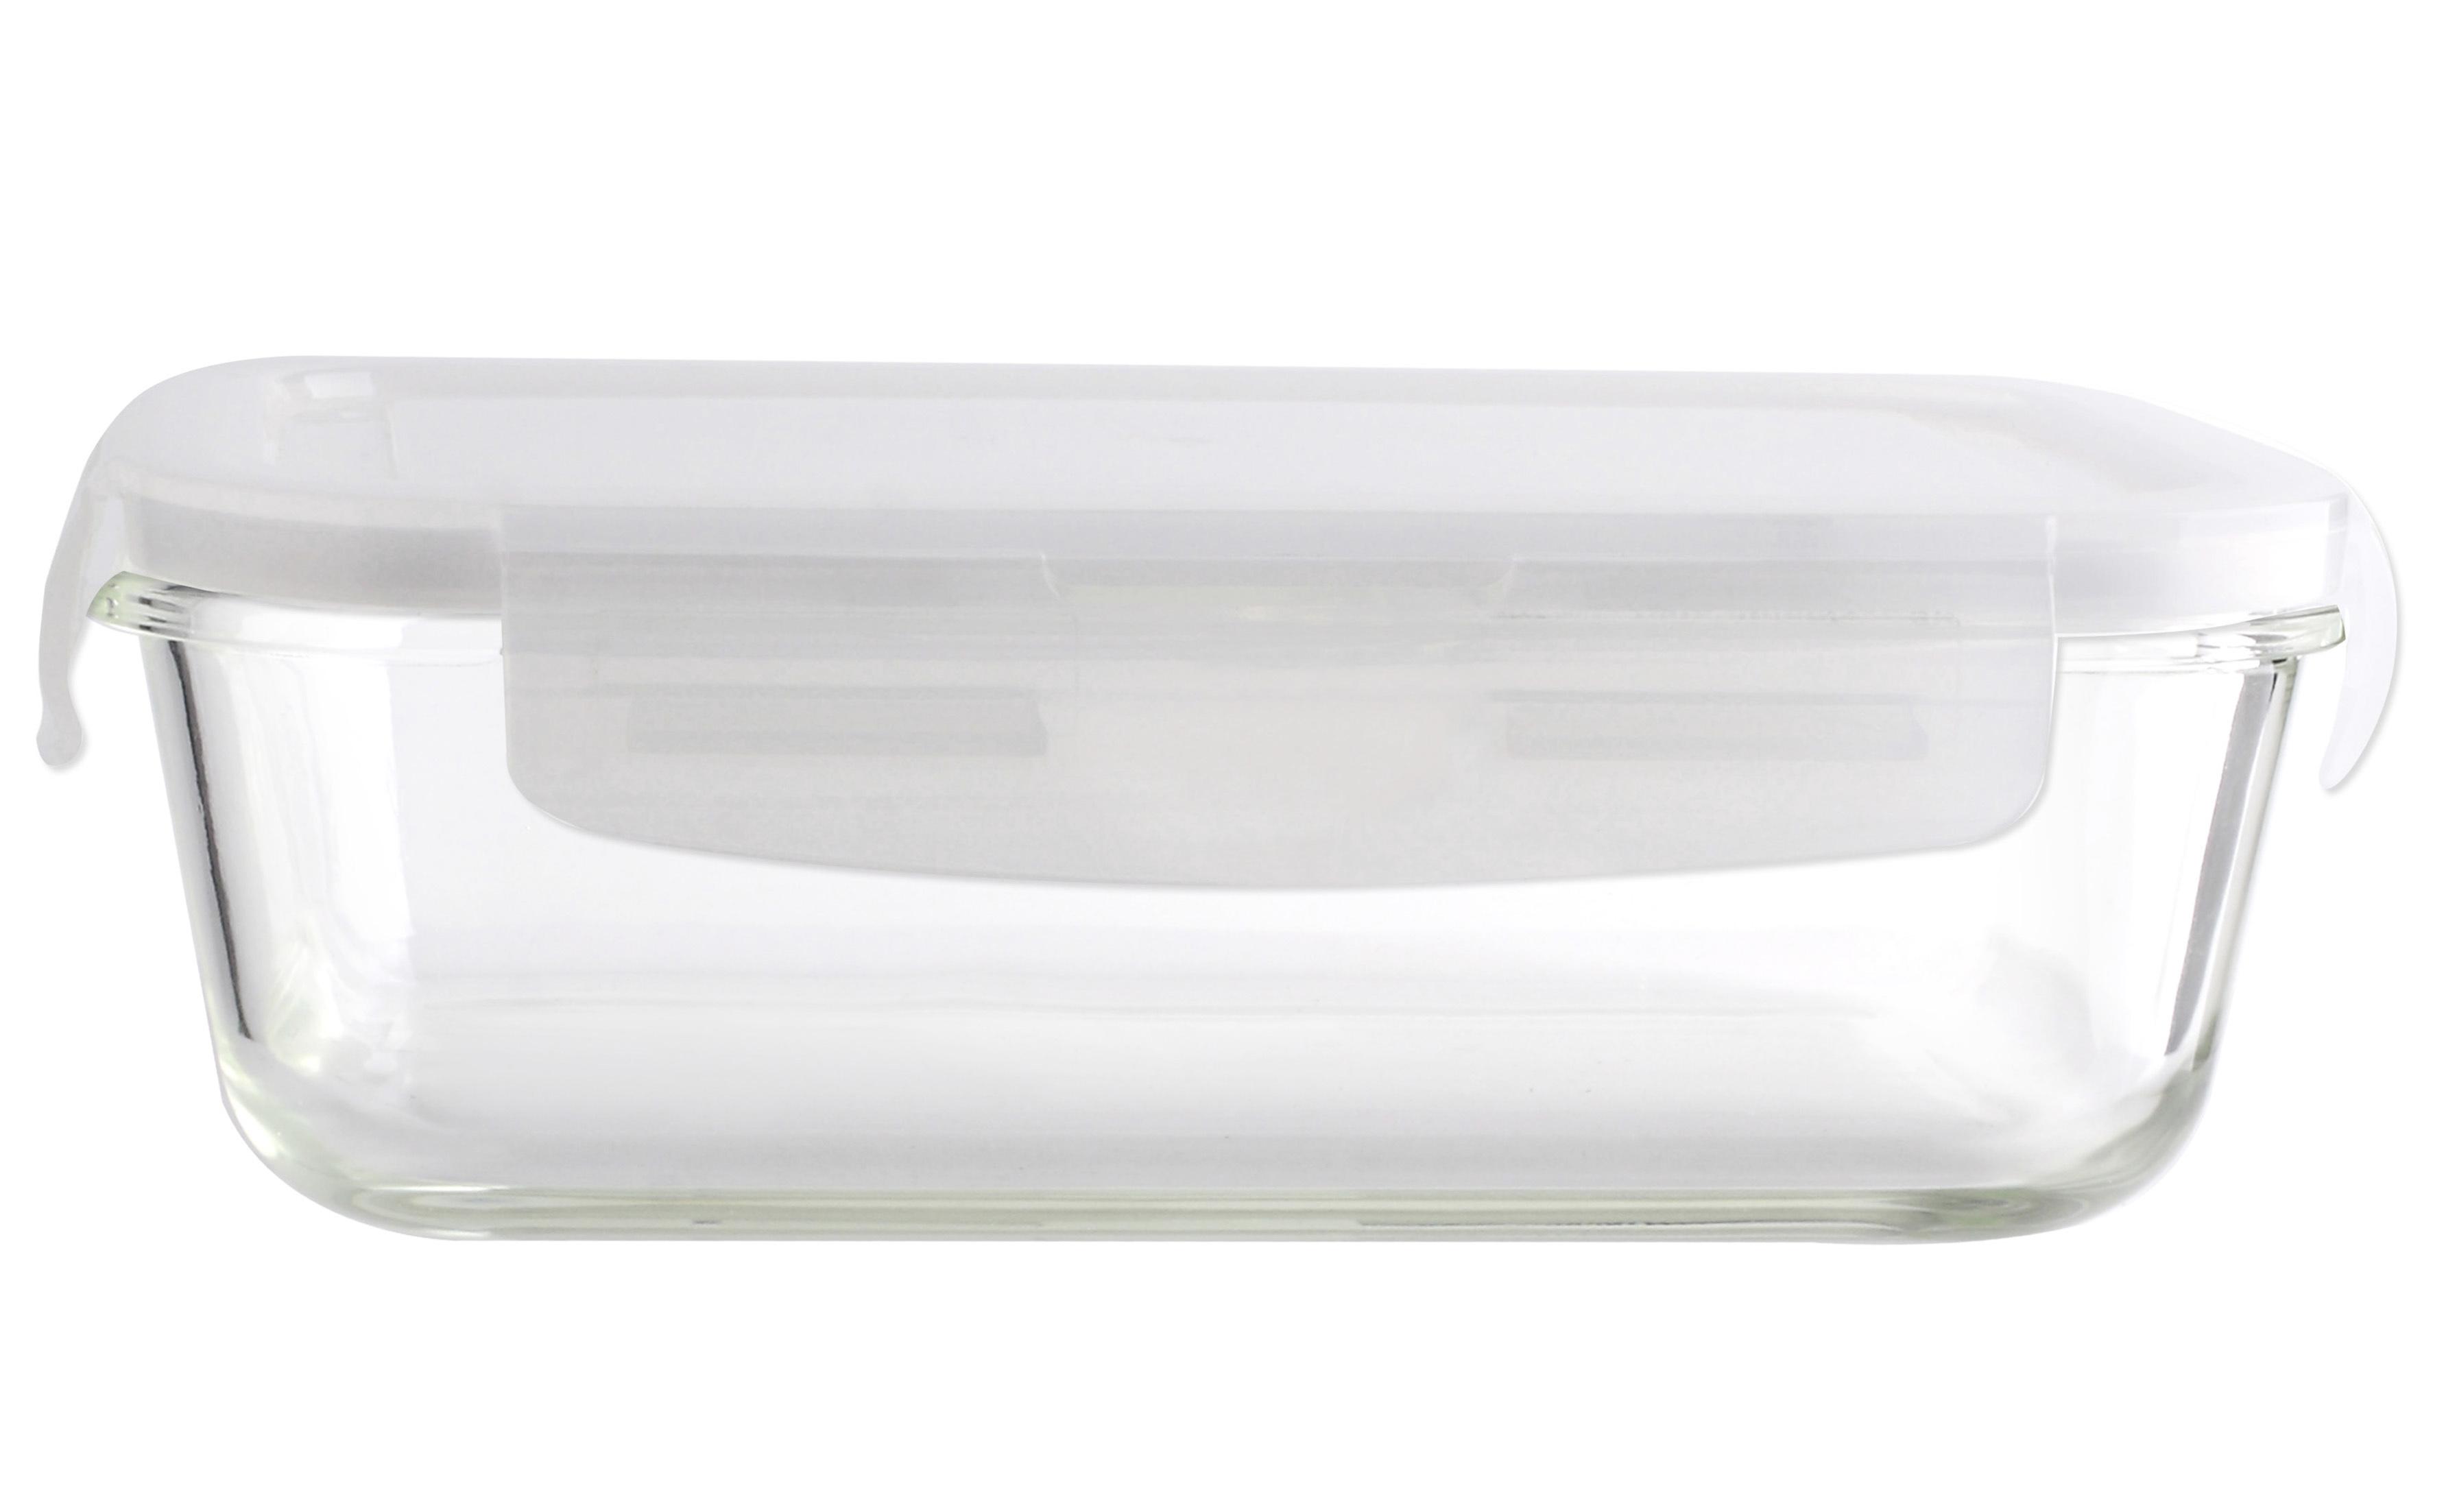 Krabička Na Potraviny Fresh - 2,05l - čiré, plast/sklo (25,8/21,1/9,5cm) - Modern Living